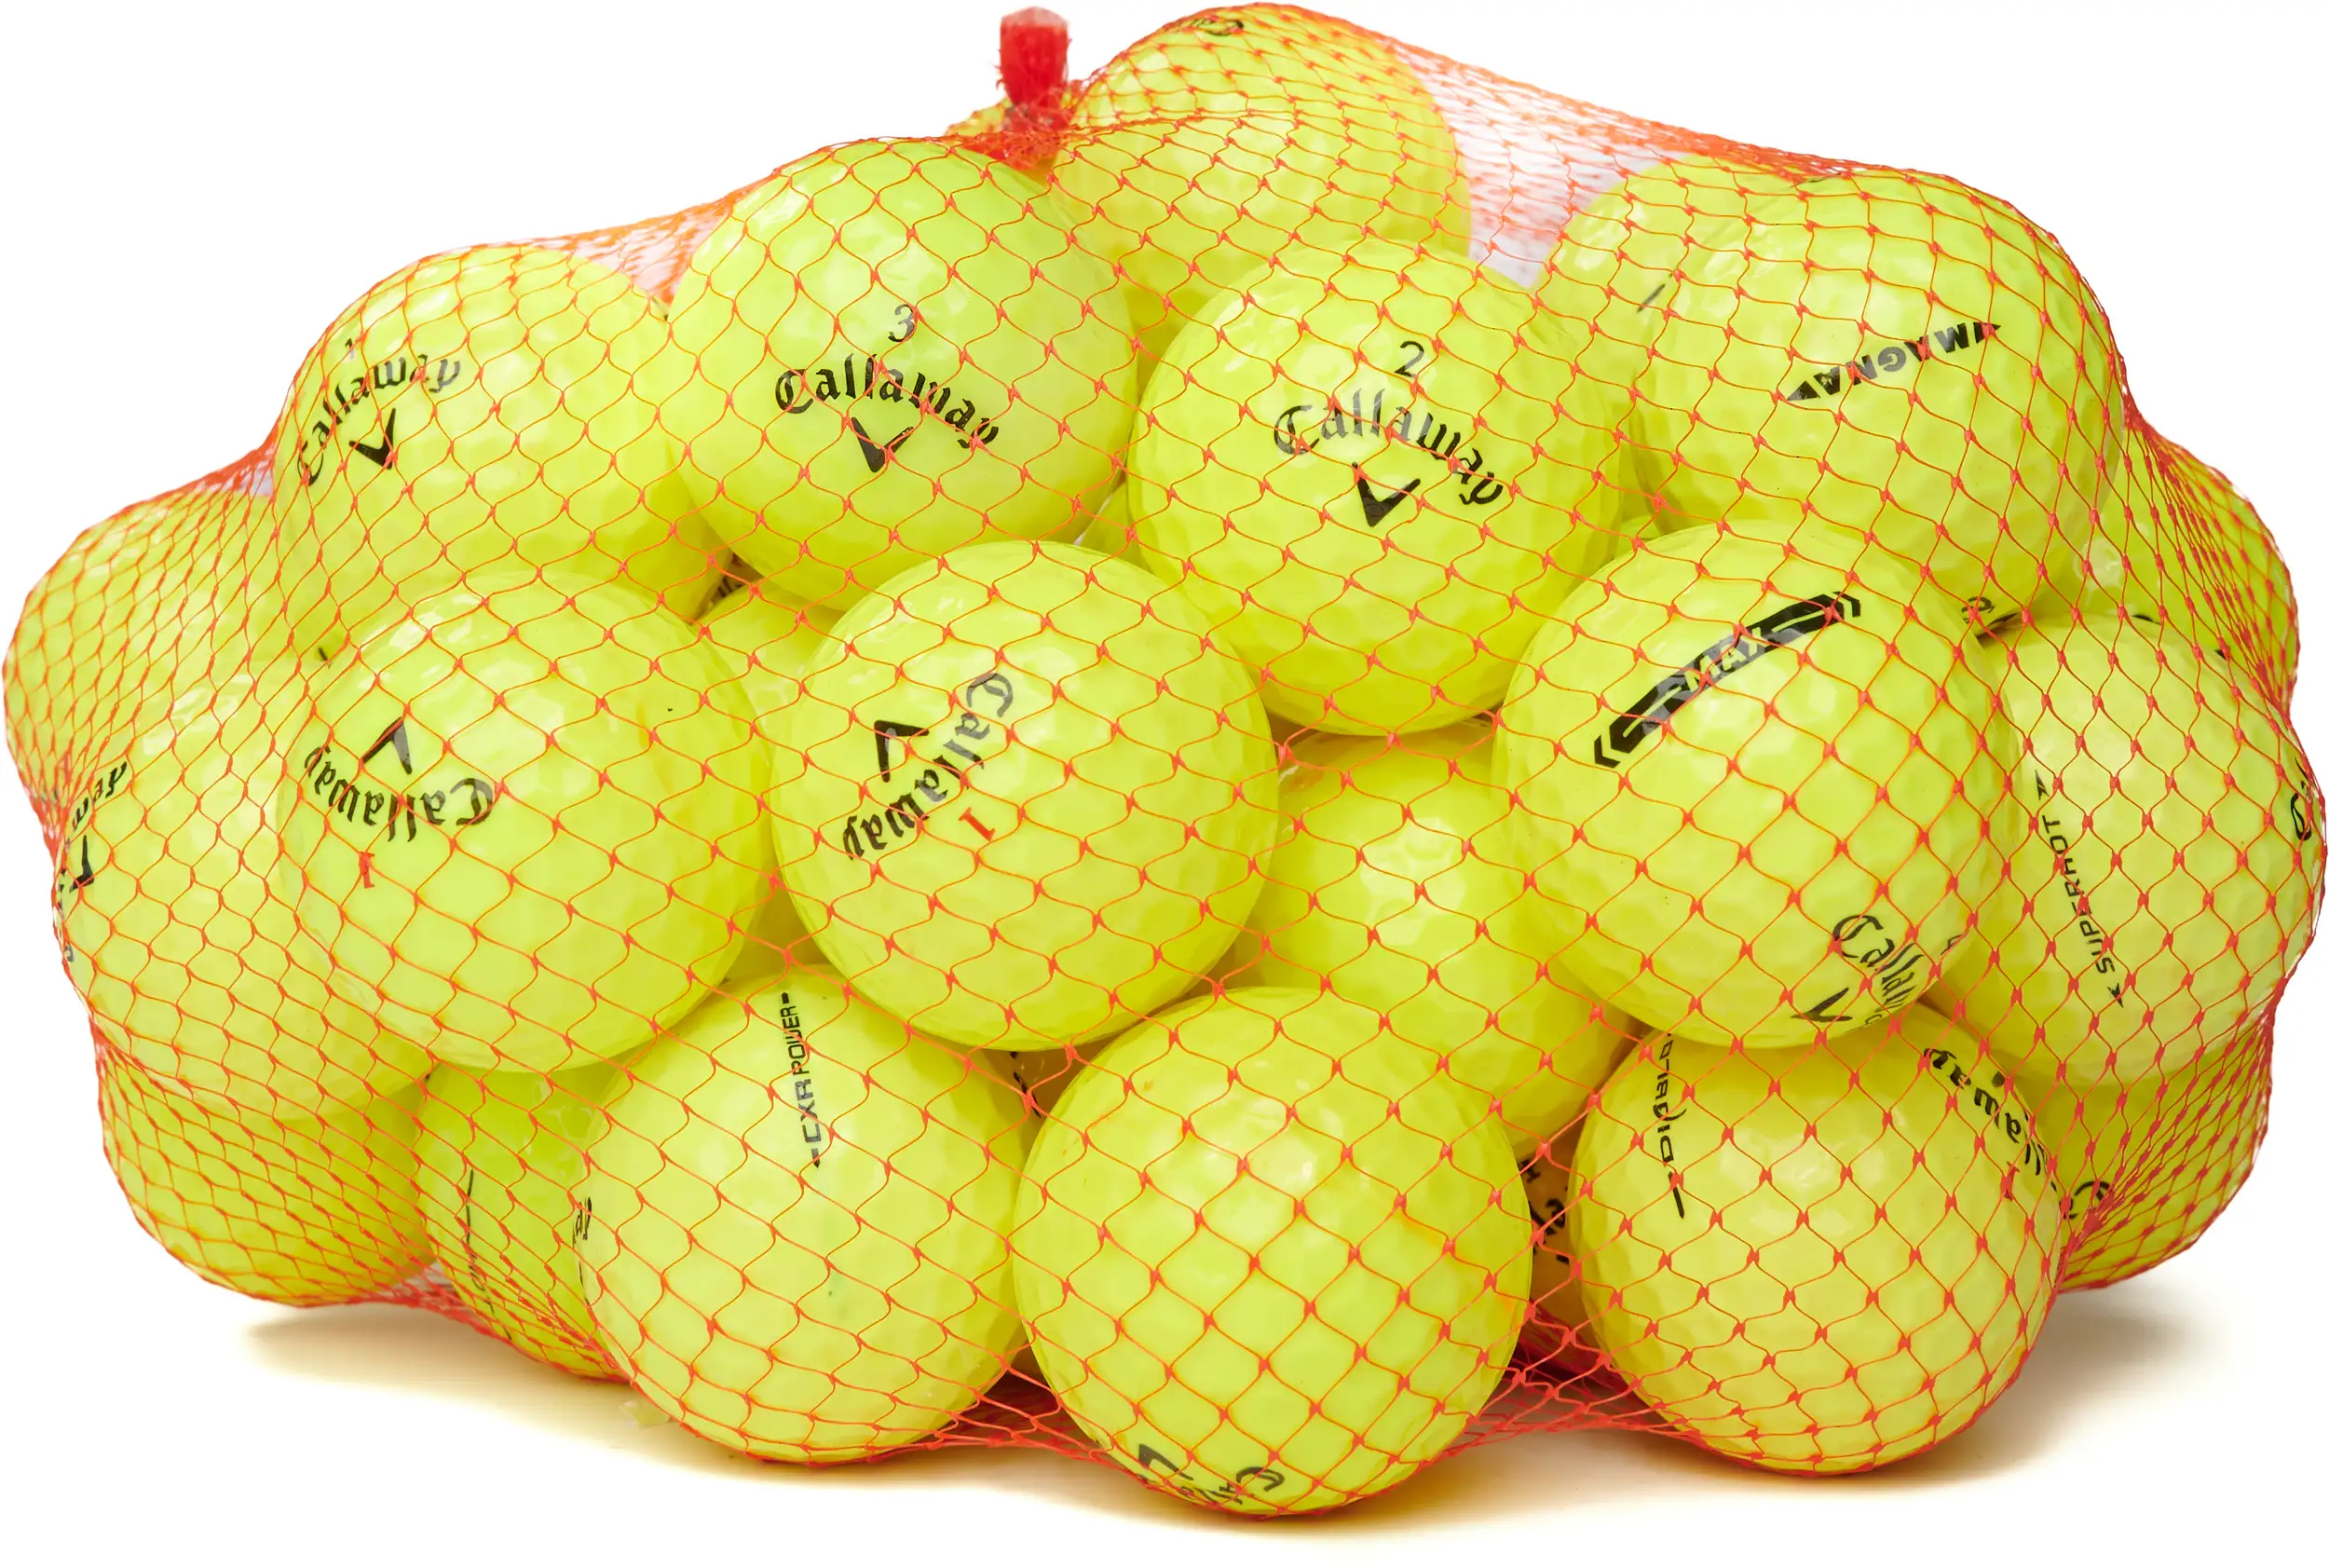 50 Callaway Mix Lakeballs, yellow